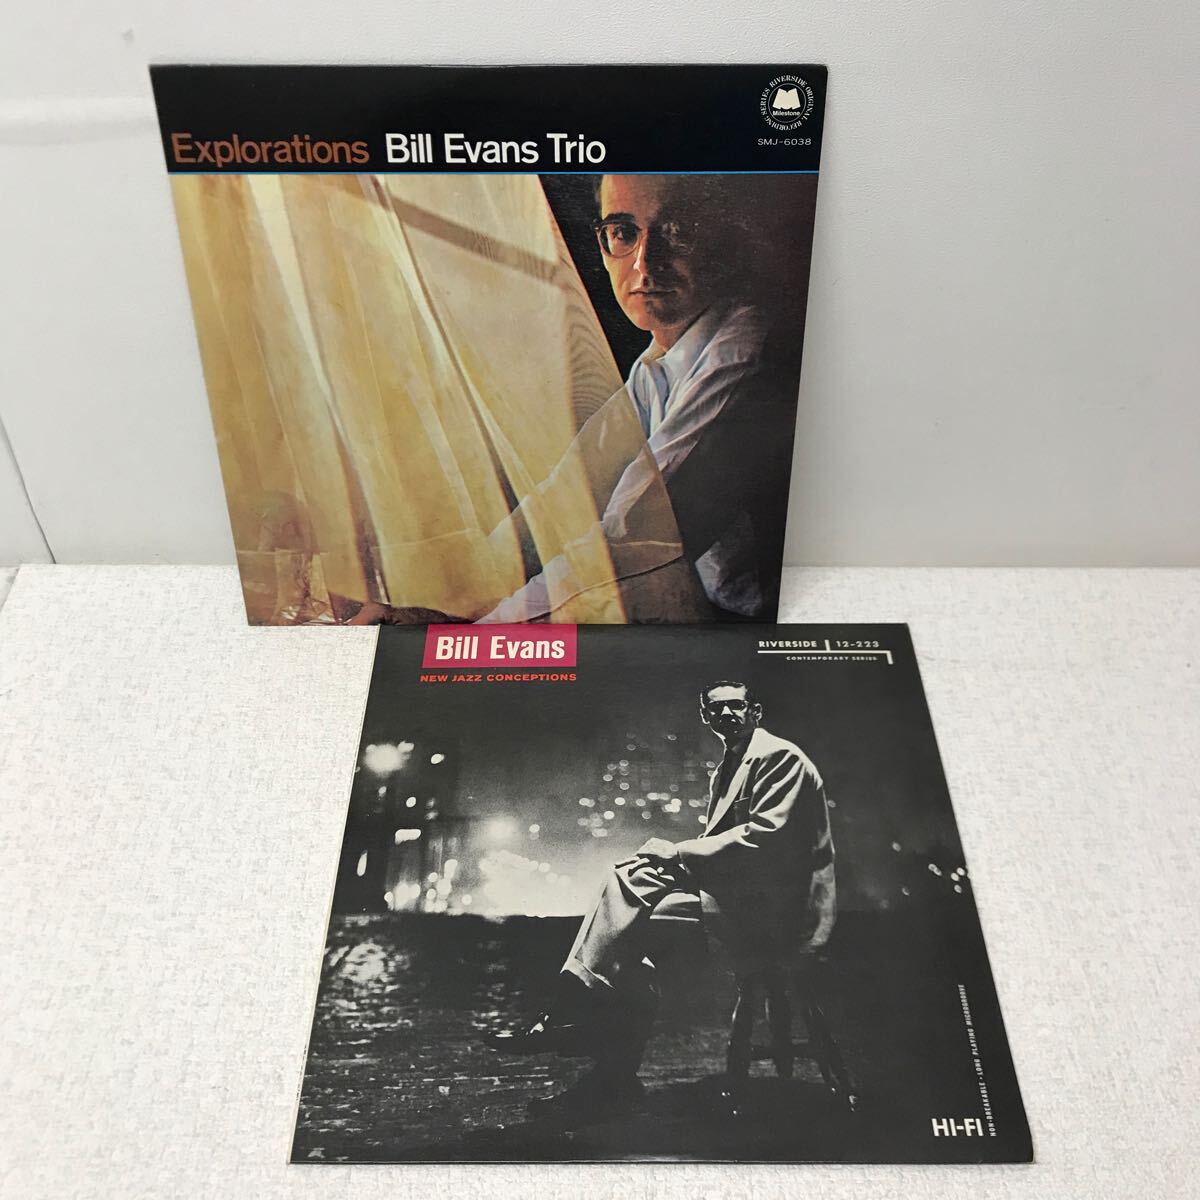 I0517A3 ビル・エヴァンス BILL EVANS LP レコード 2巻セット 音楽 洋楽 ジャズ JAZZ 国内盤 / New JAZZ Conceptions / EXPLORATIONS_画像1